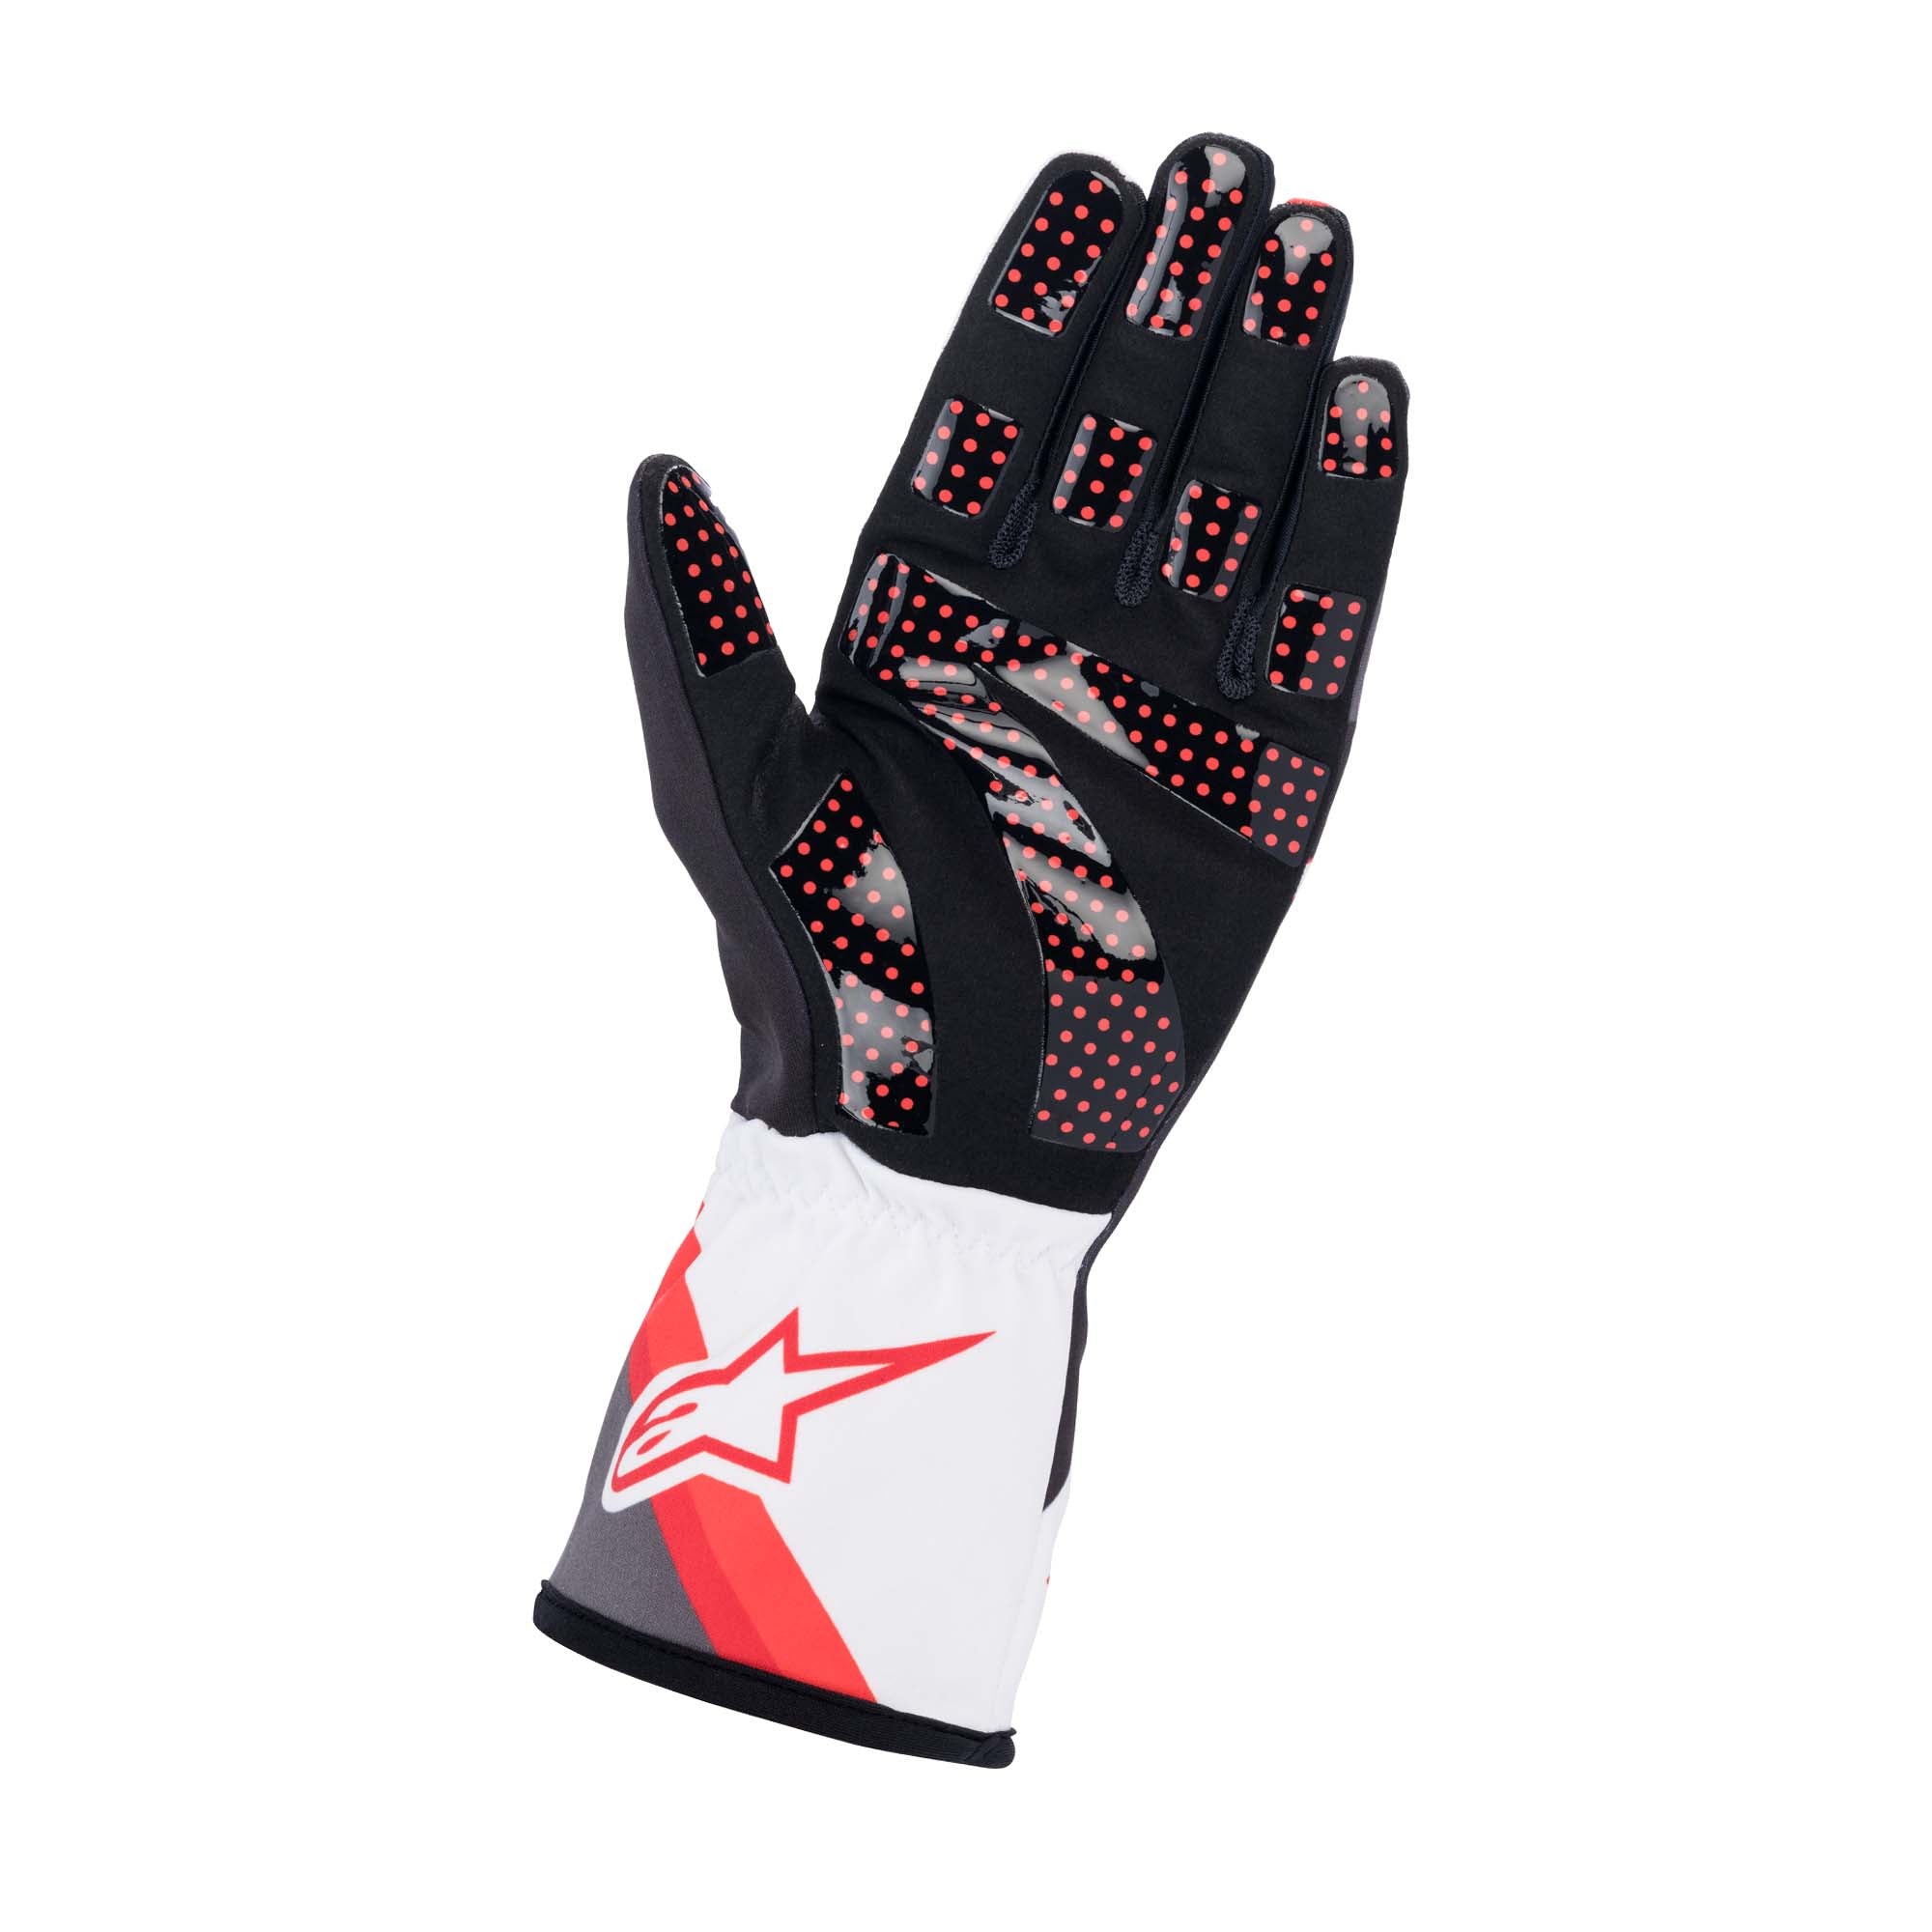 Alpinestars Tech-1 K Race S v2 Youth Karting Gloves - Graphic, Black/White/Red Palm